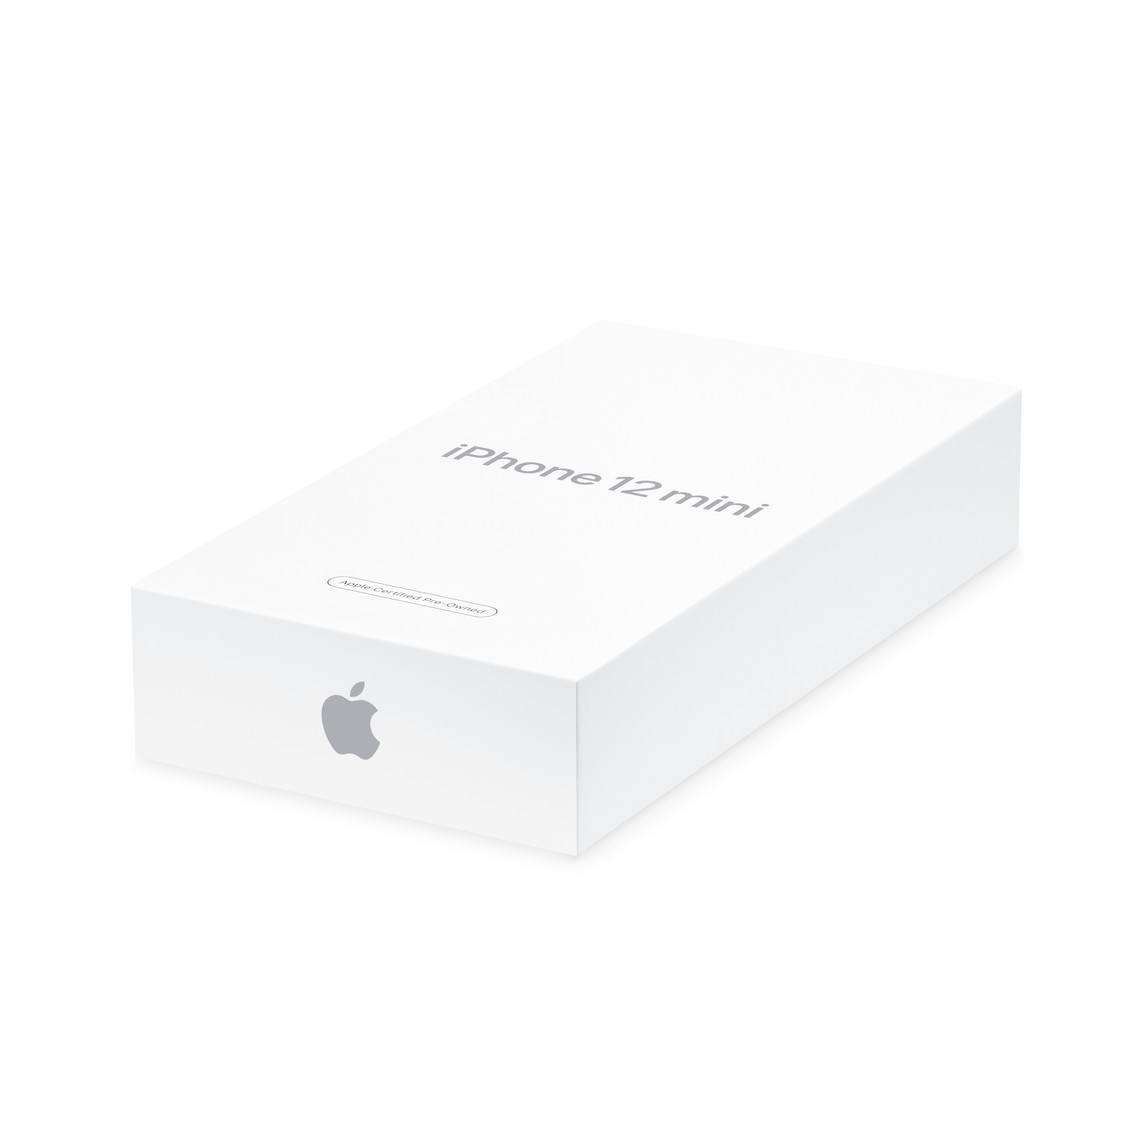 Ранее Apple не выпускала мини-версию iPhone 12 в продажу в формате refurbished